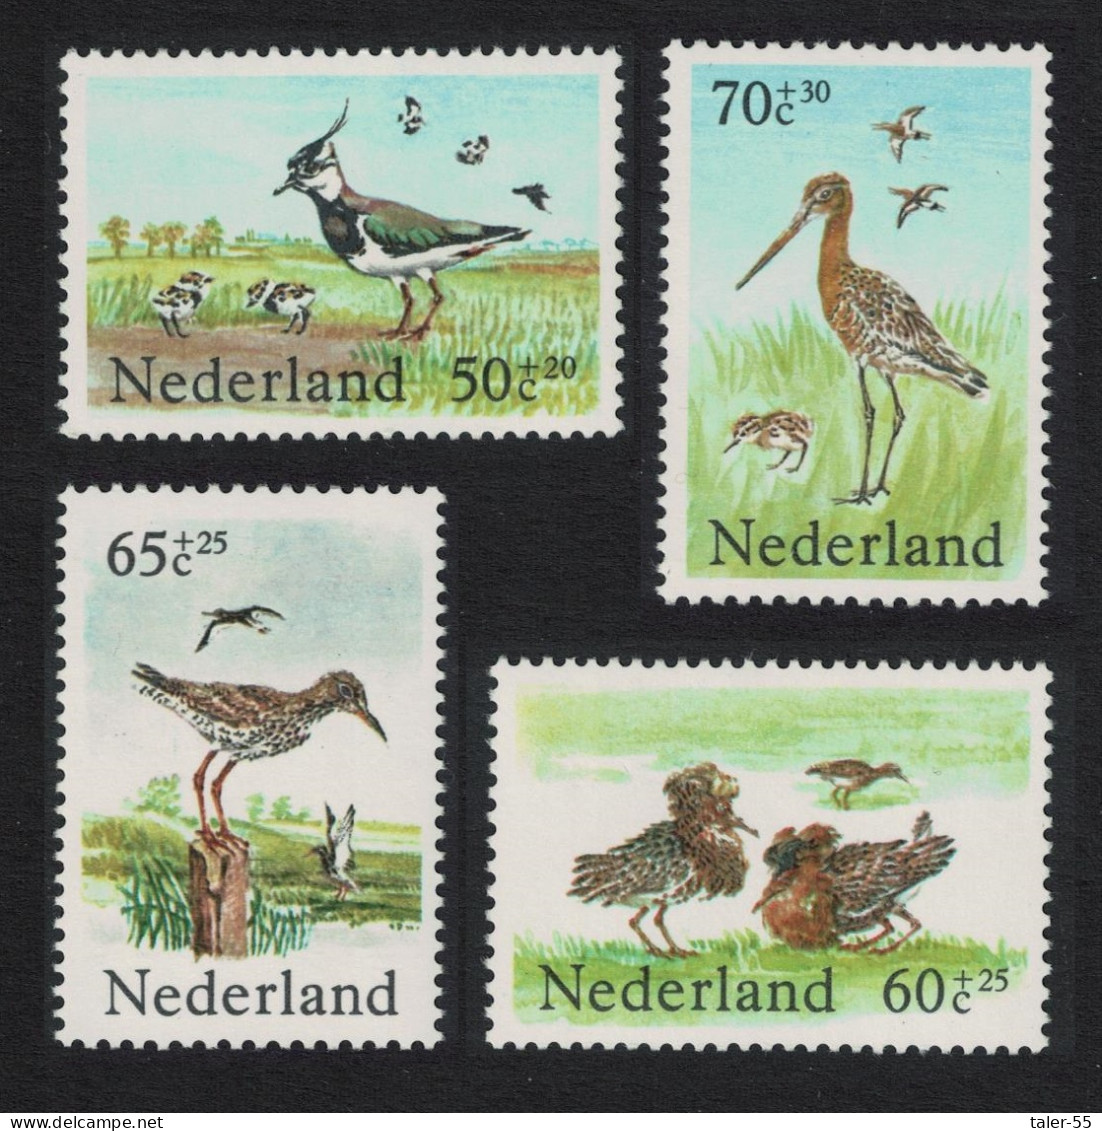 Netherlands Lapwing Redshank Ruff Godwit Pasture Birds 4v 1984 MNH SG#1435-1438 MI#1246-1249 Sc#B600-603 - Neufs